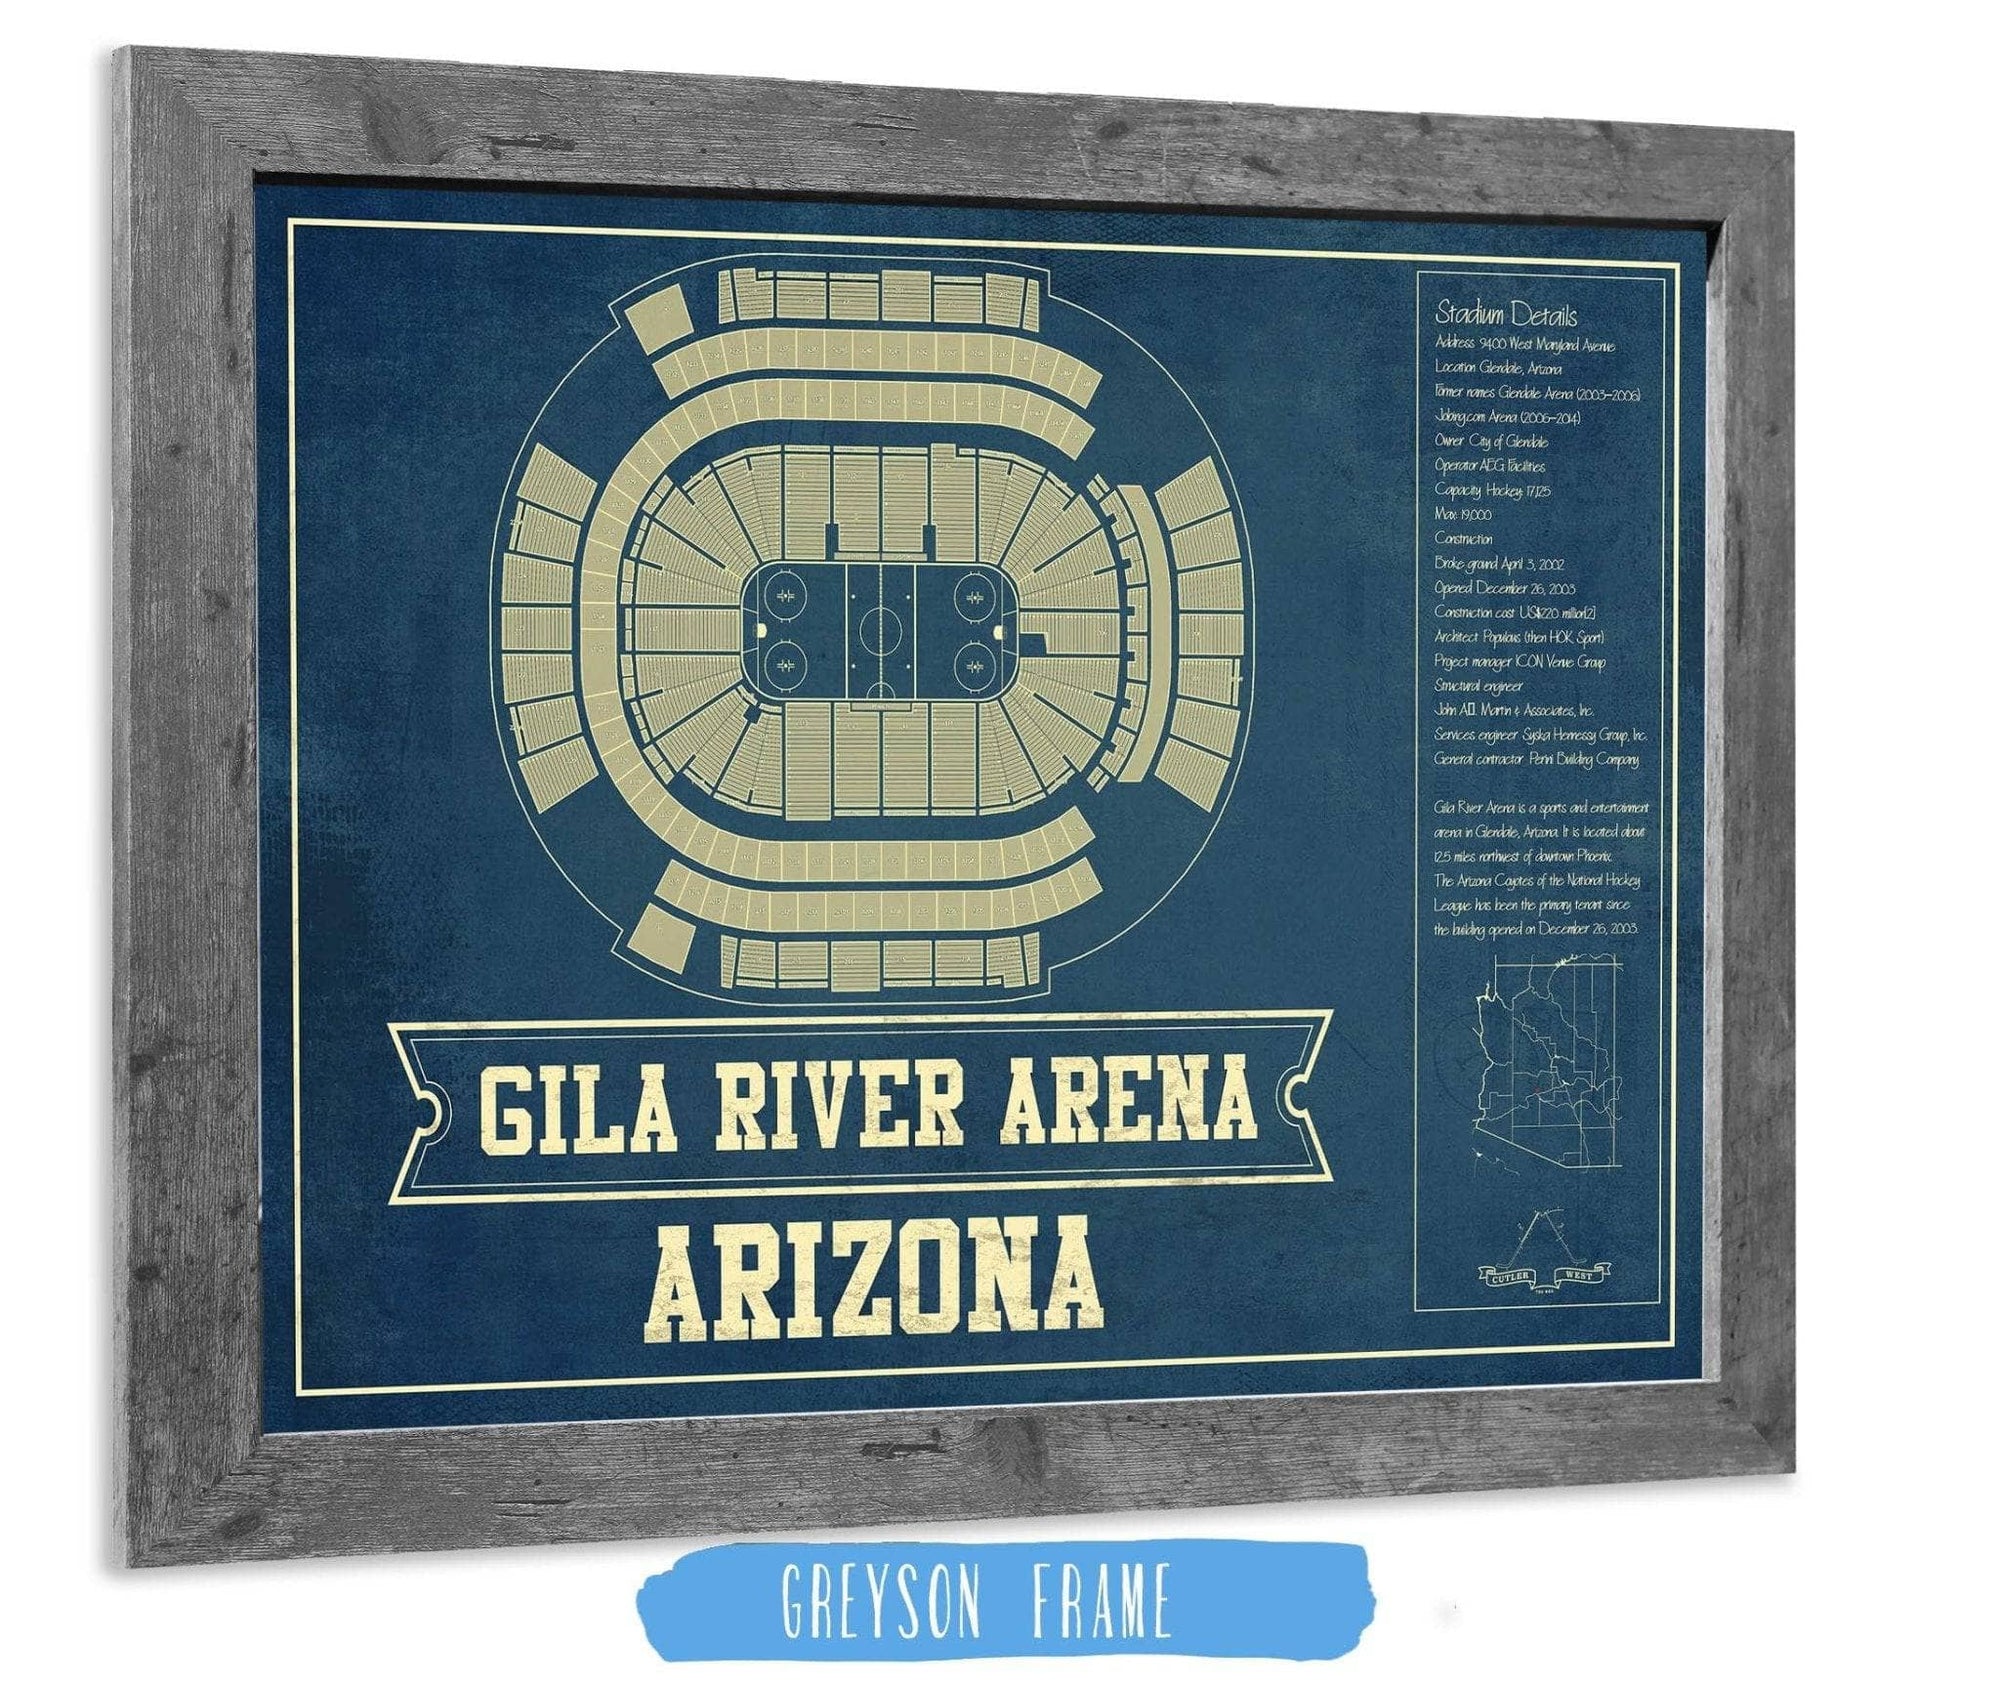 Cutler West 14" x 11" / Greyson Frame Arizona Coyotes - Gila River Arena Vintage Hockey Blueprint NHL Print 933350179_78220